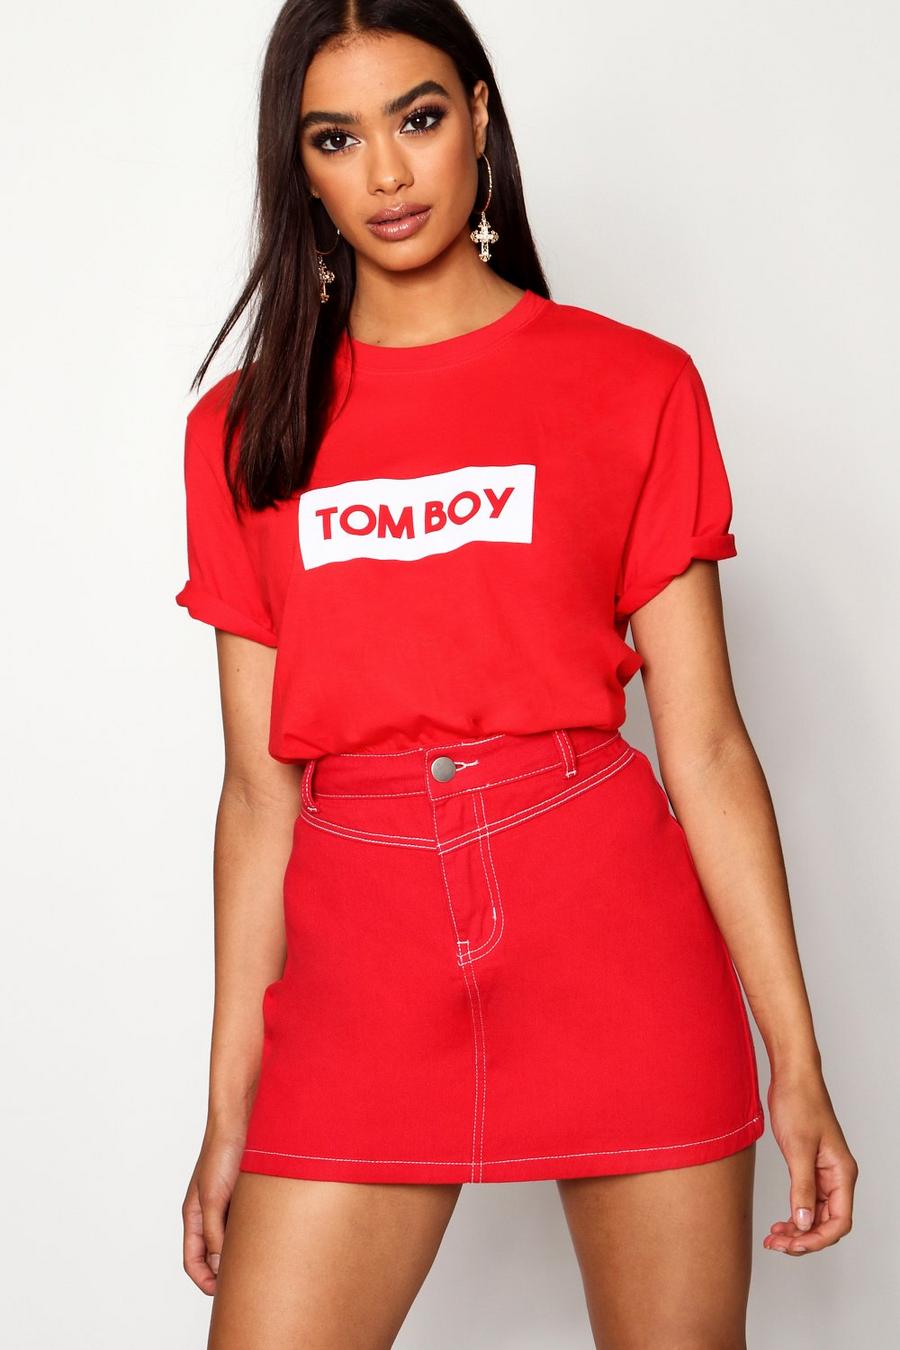 Camiseta con eslogan “Tomboy” image number 1